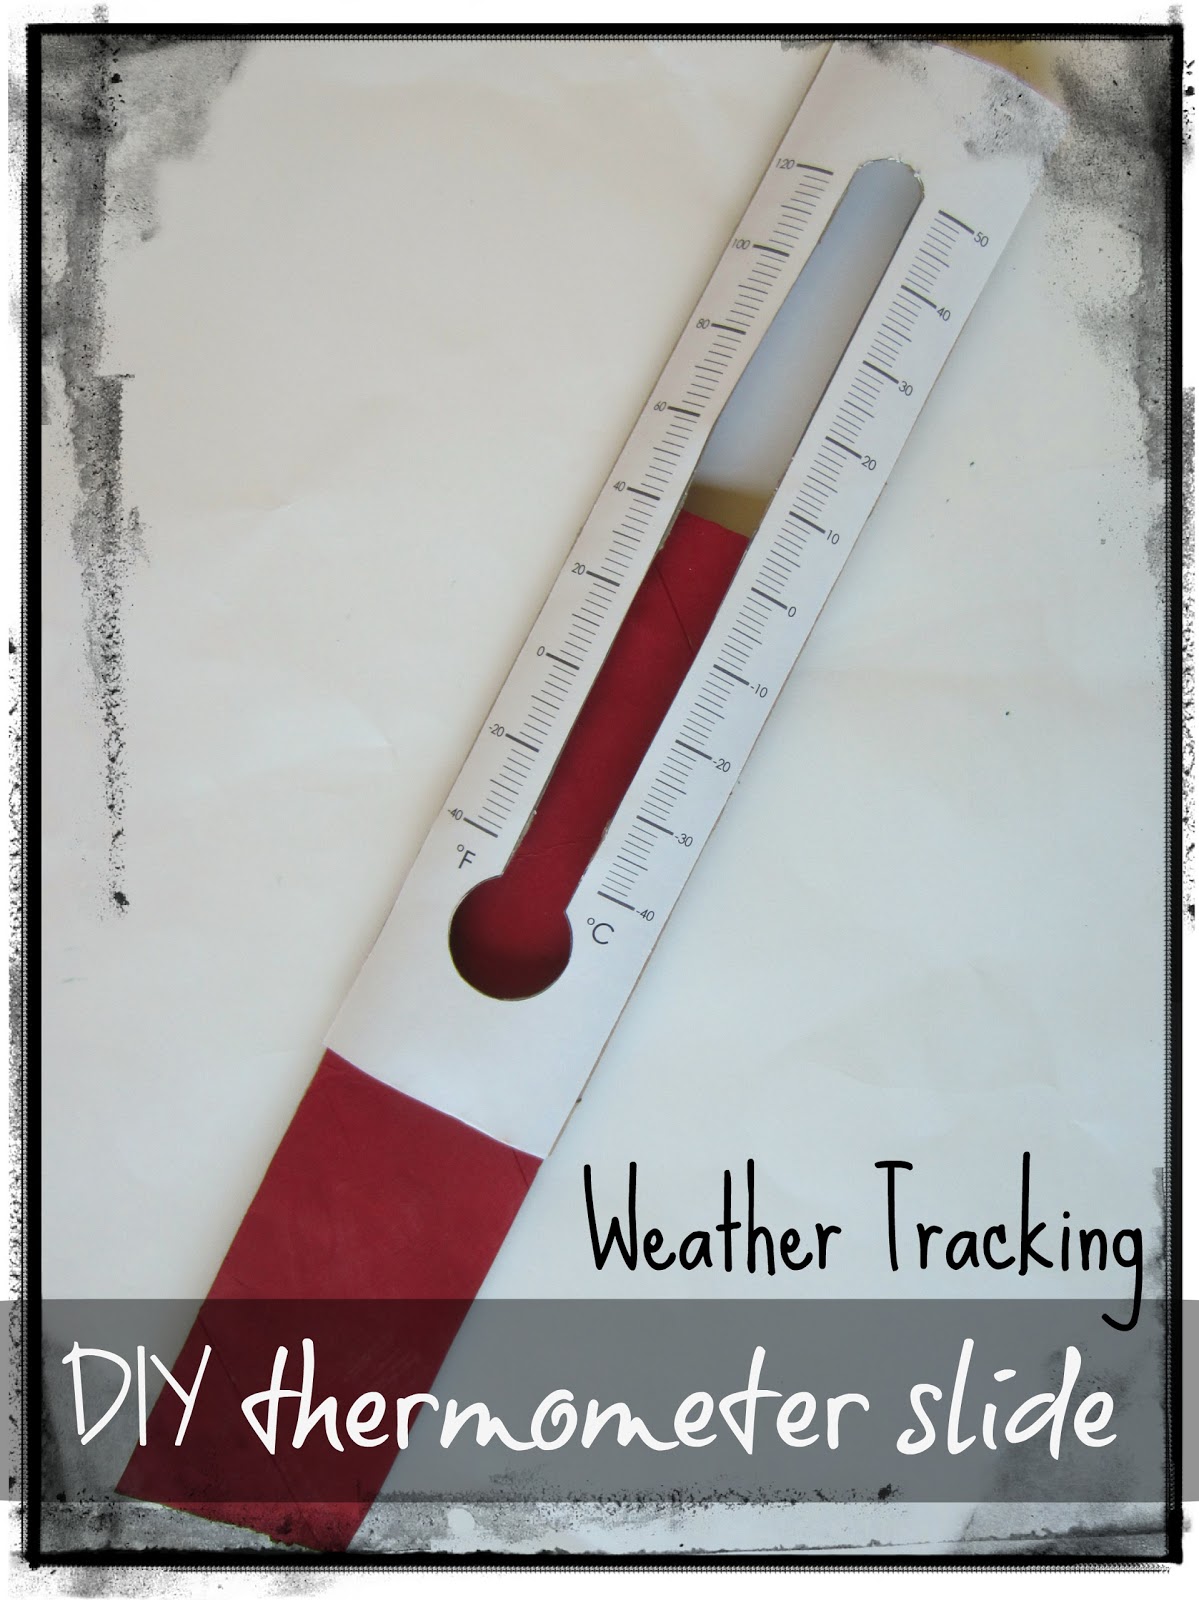 https://1.bp.blogspot.com/-OS7rKMdgIR8/ULqqNEJ0T9I/AAAAAAAACfk/3nrgWceLPno/s1600/Weather+Tracking+Thermometer+Slide.jpg